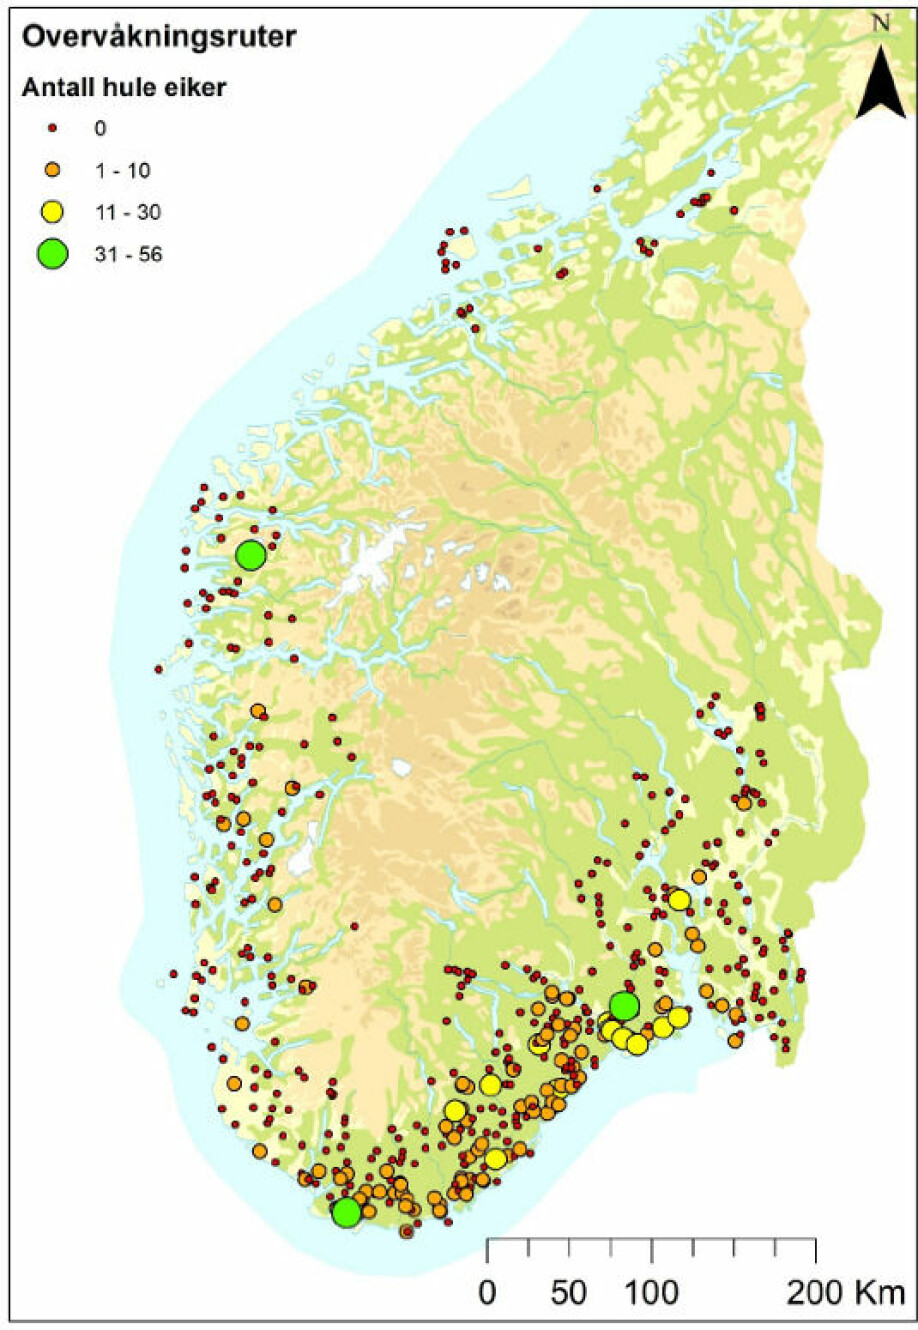 Kart over alle 500 kartlagte ruter, der symbolets størrelse og farge angir antall hule eiker funnet i ruta.